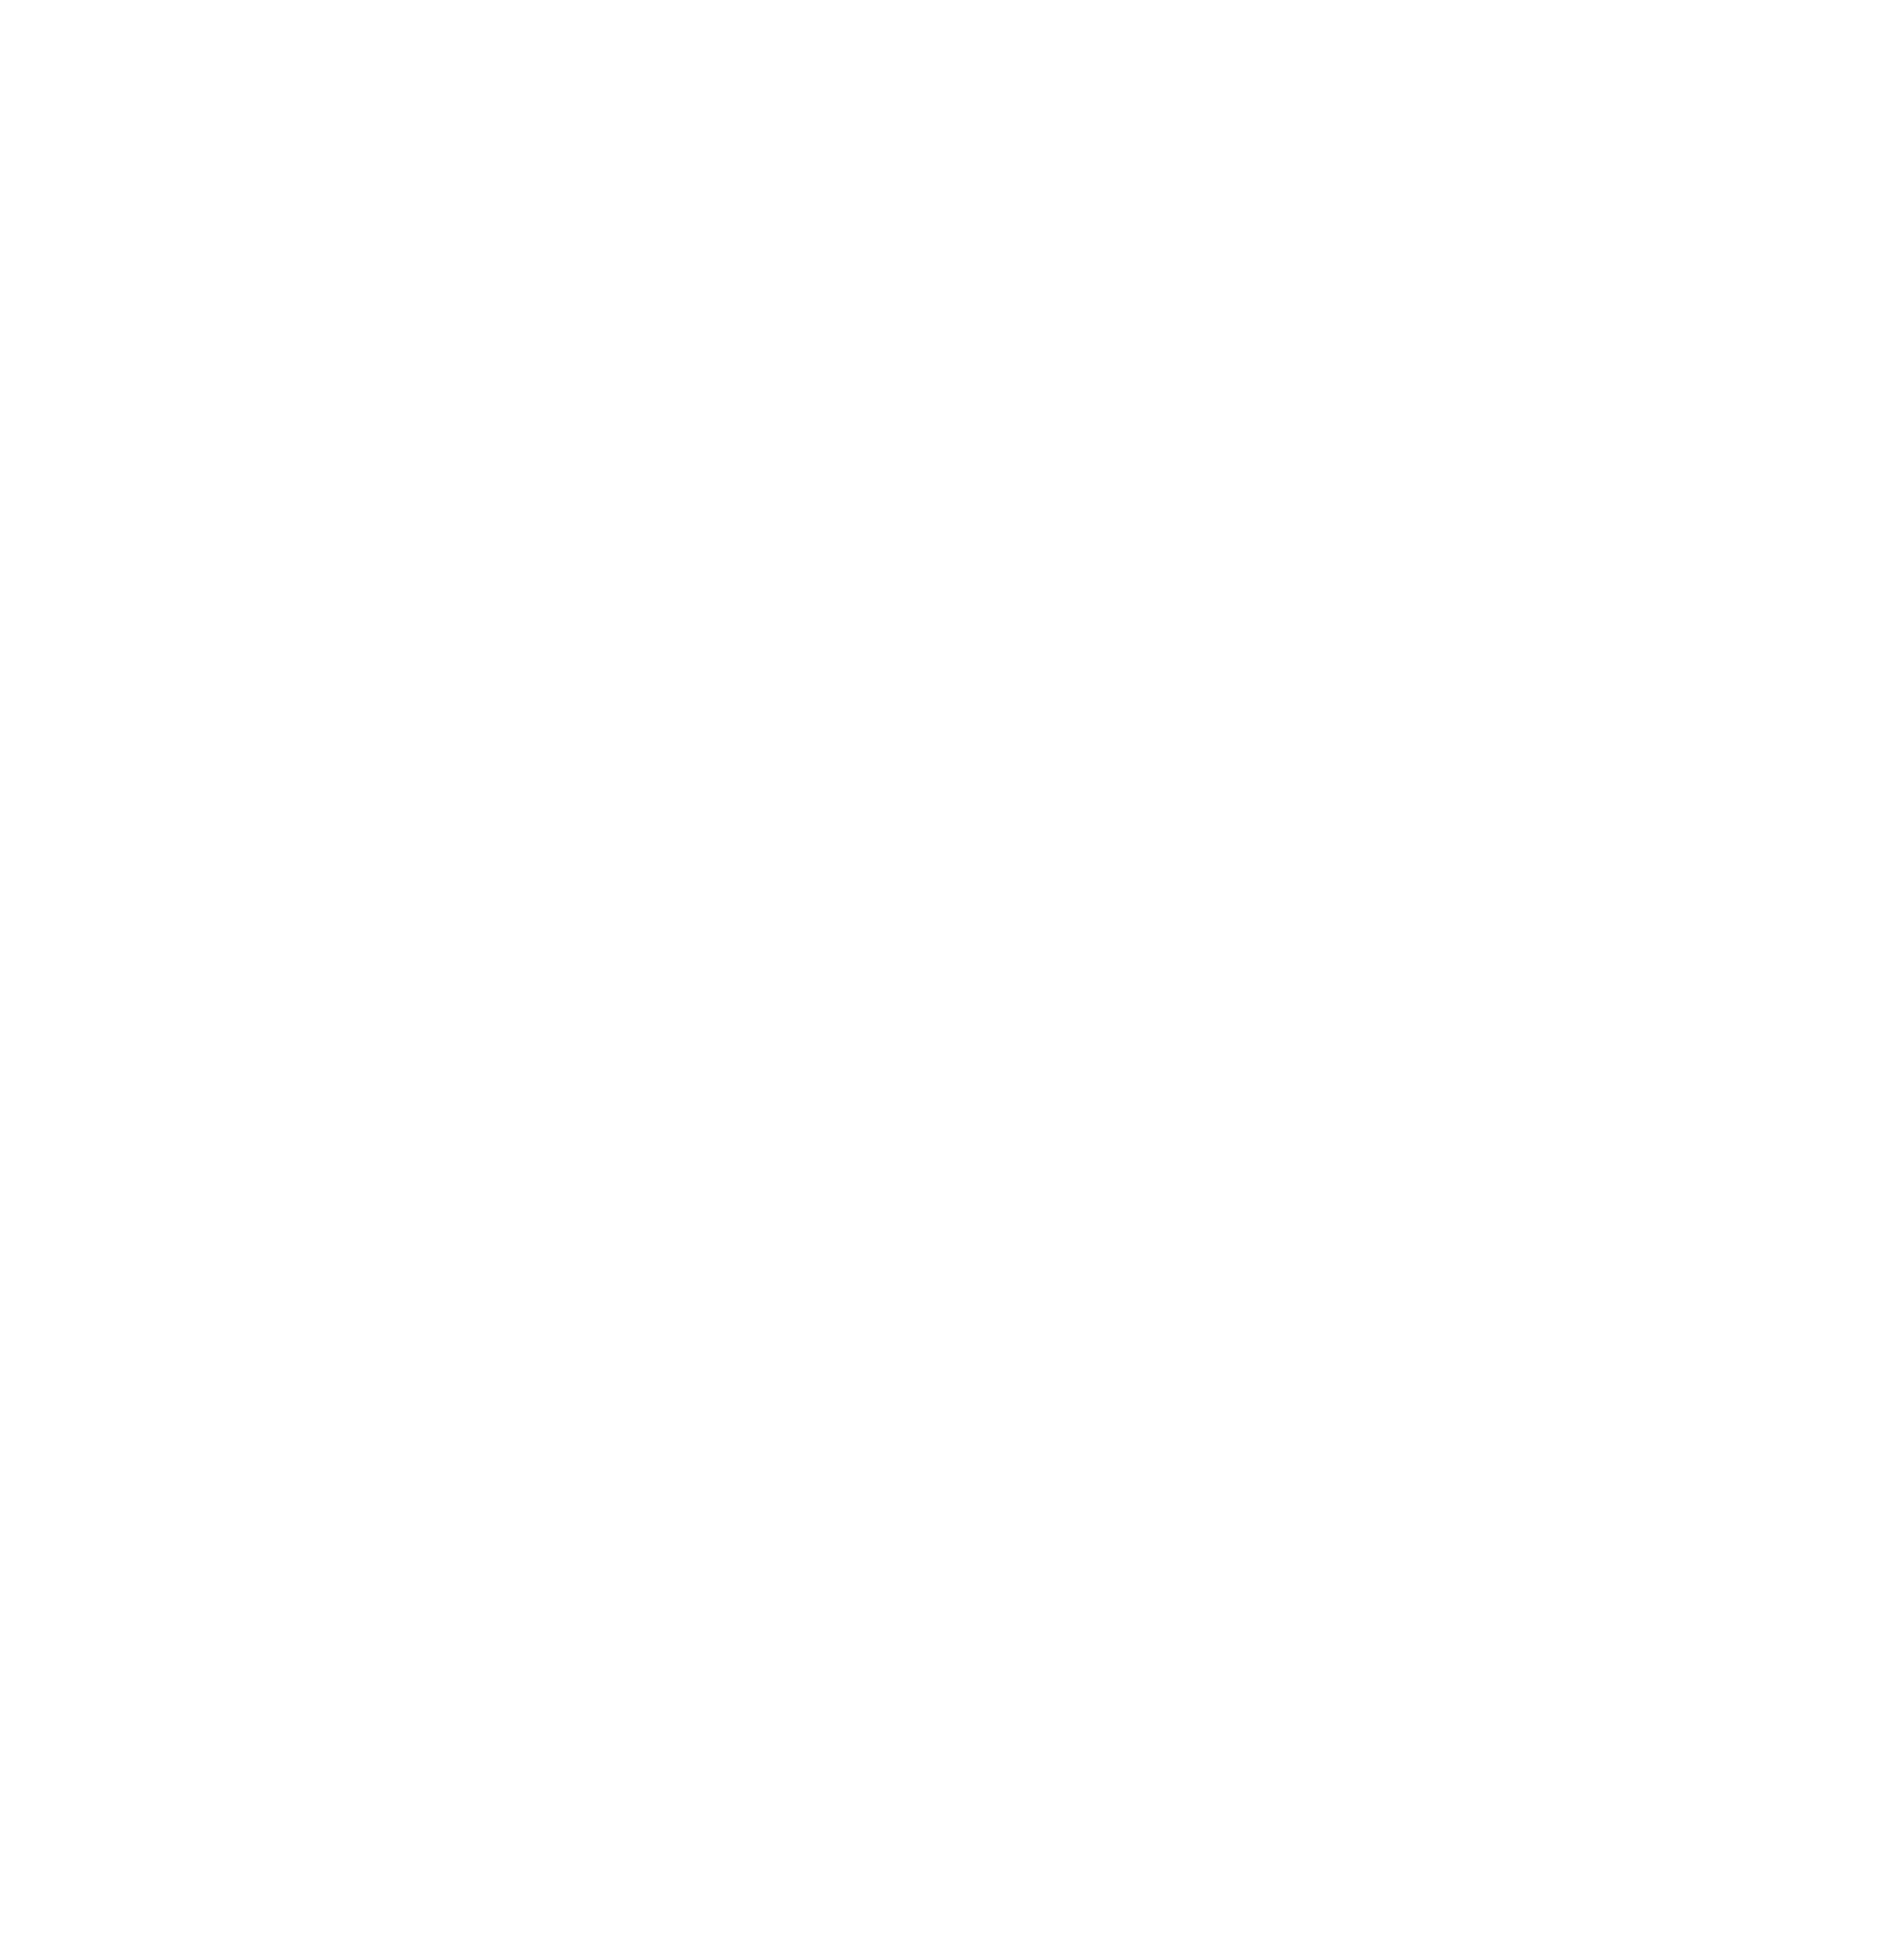 Tag8 Logo